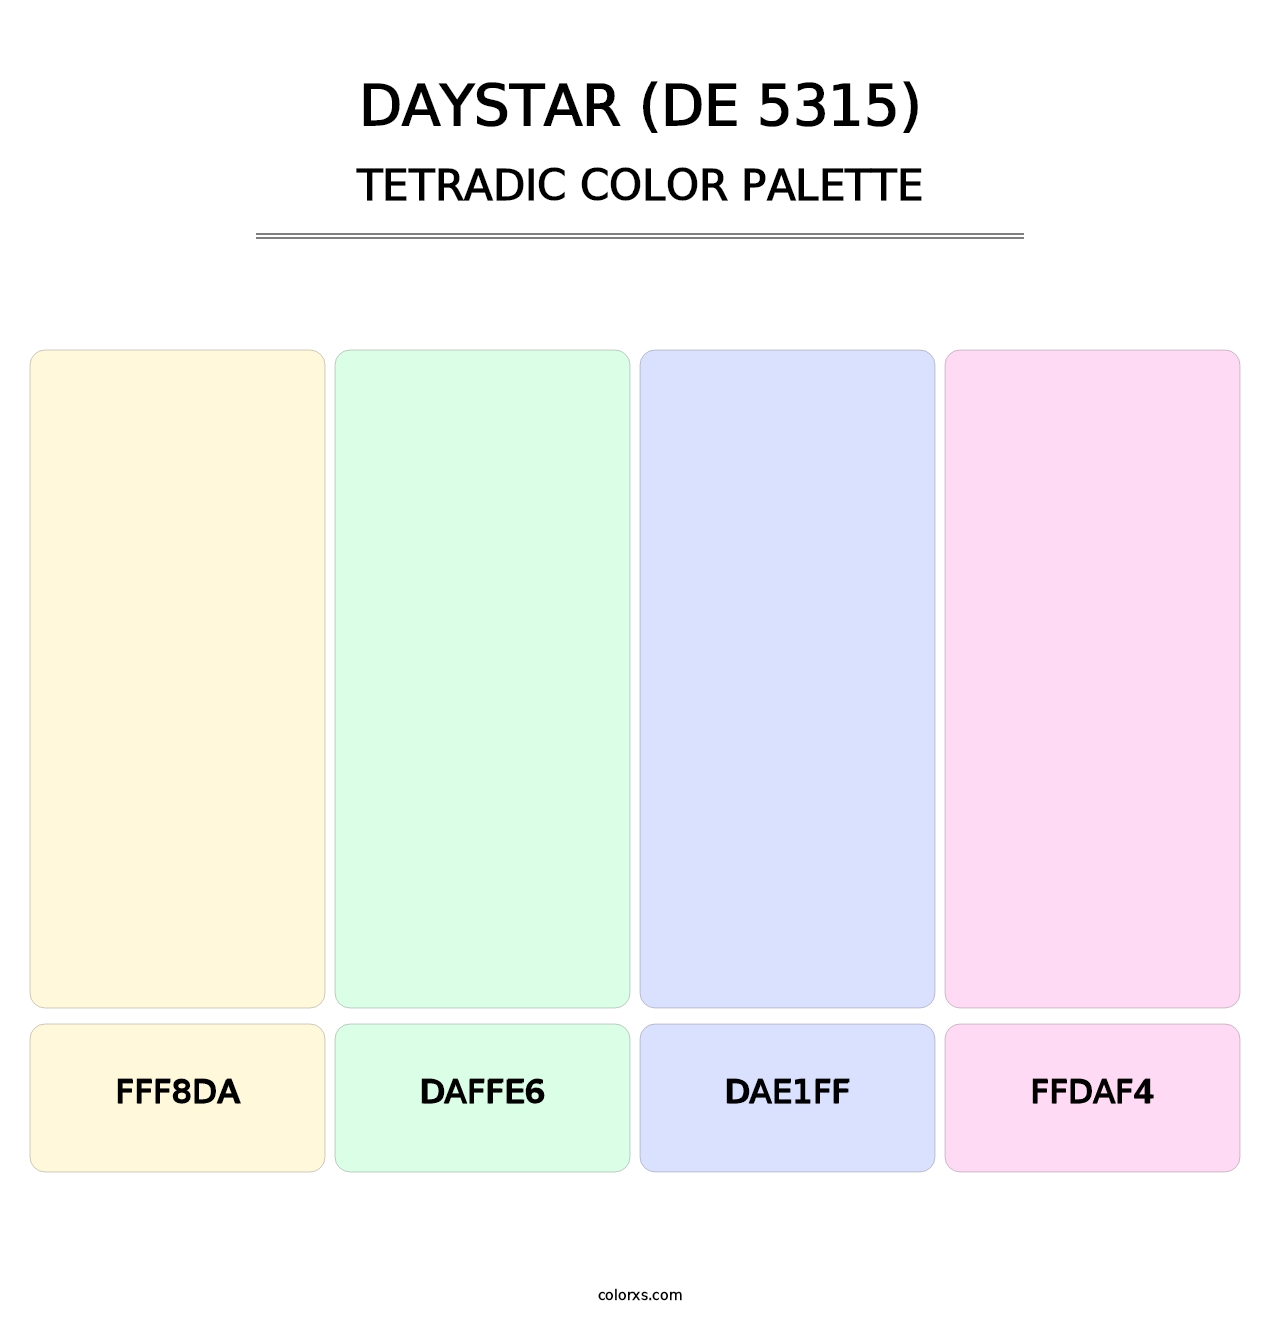 Daystar (DE 5315) - Tetradic Color Palette